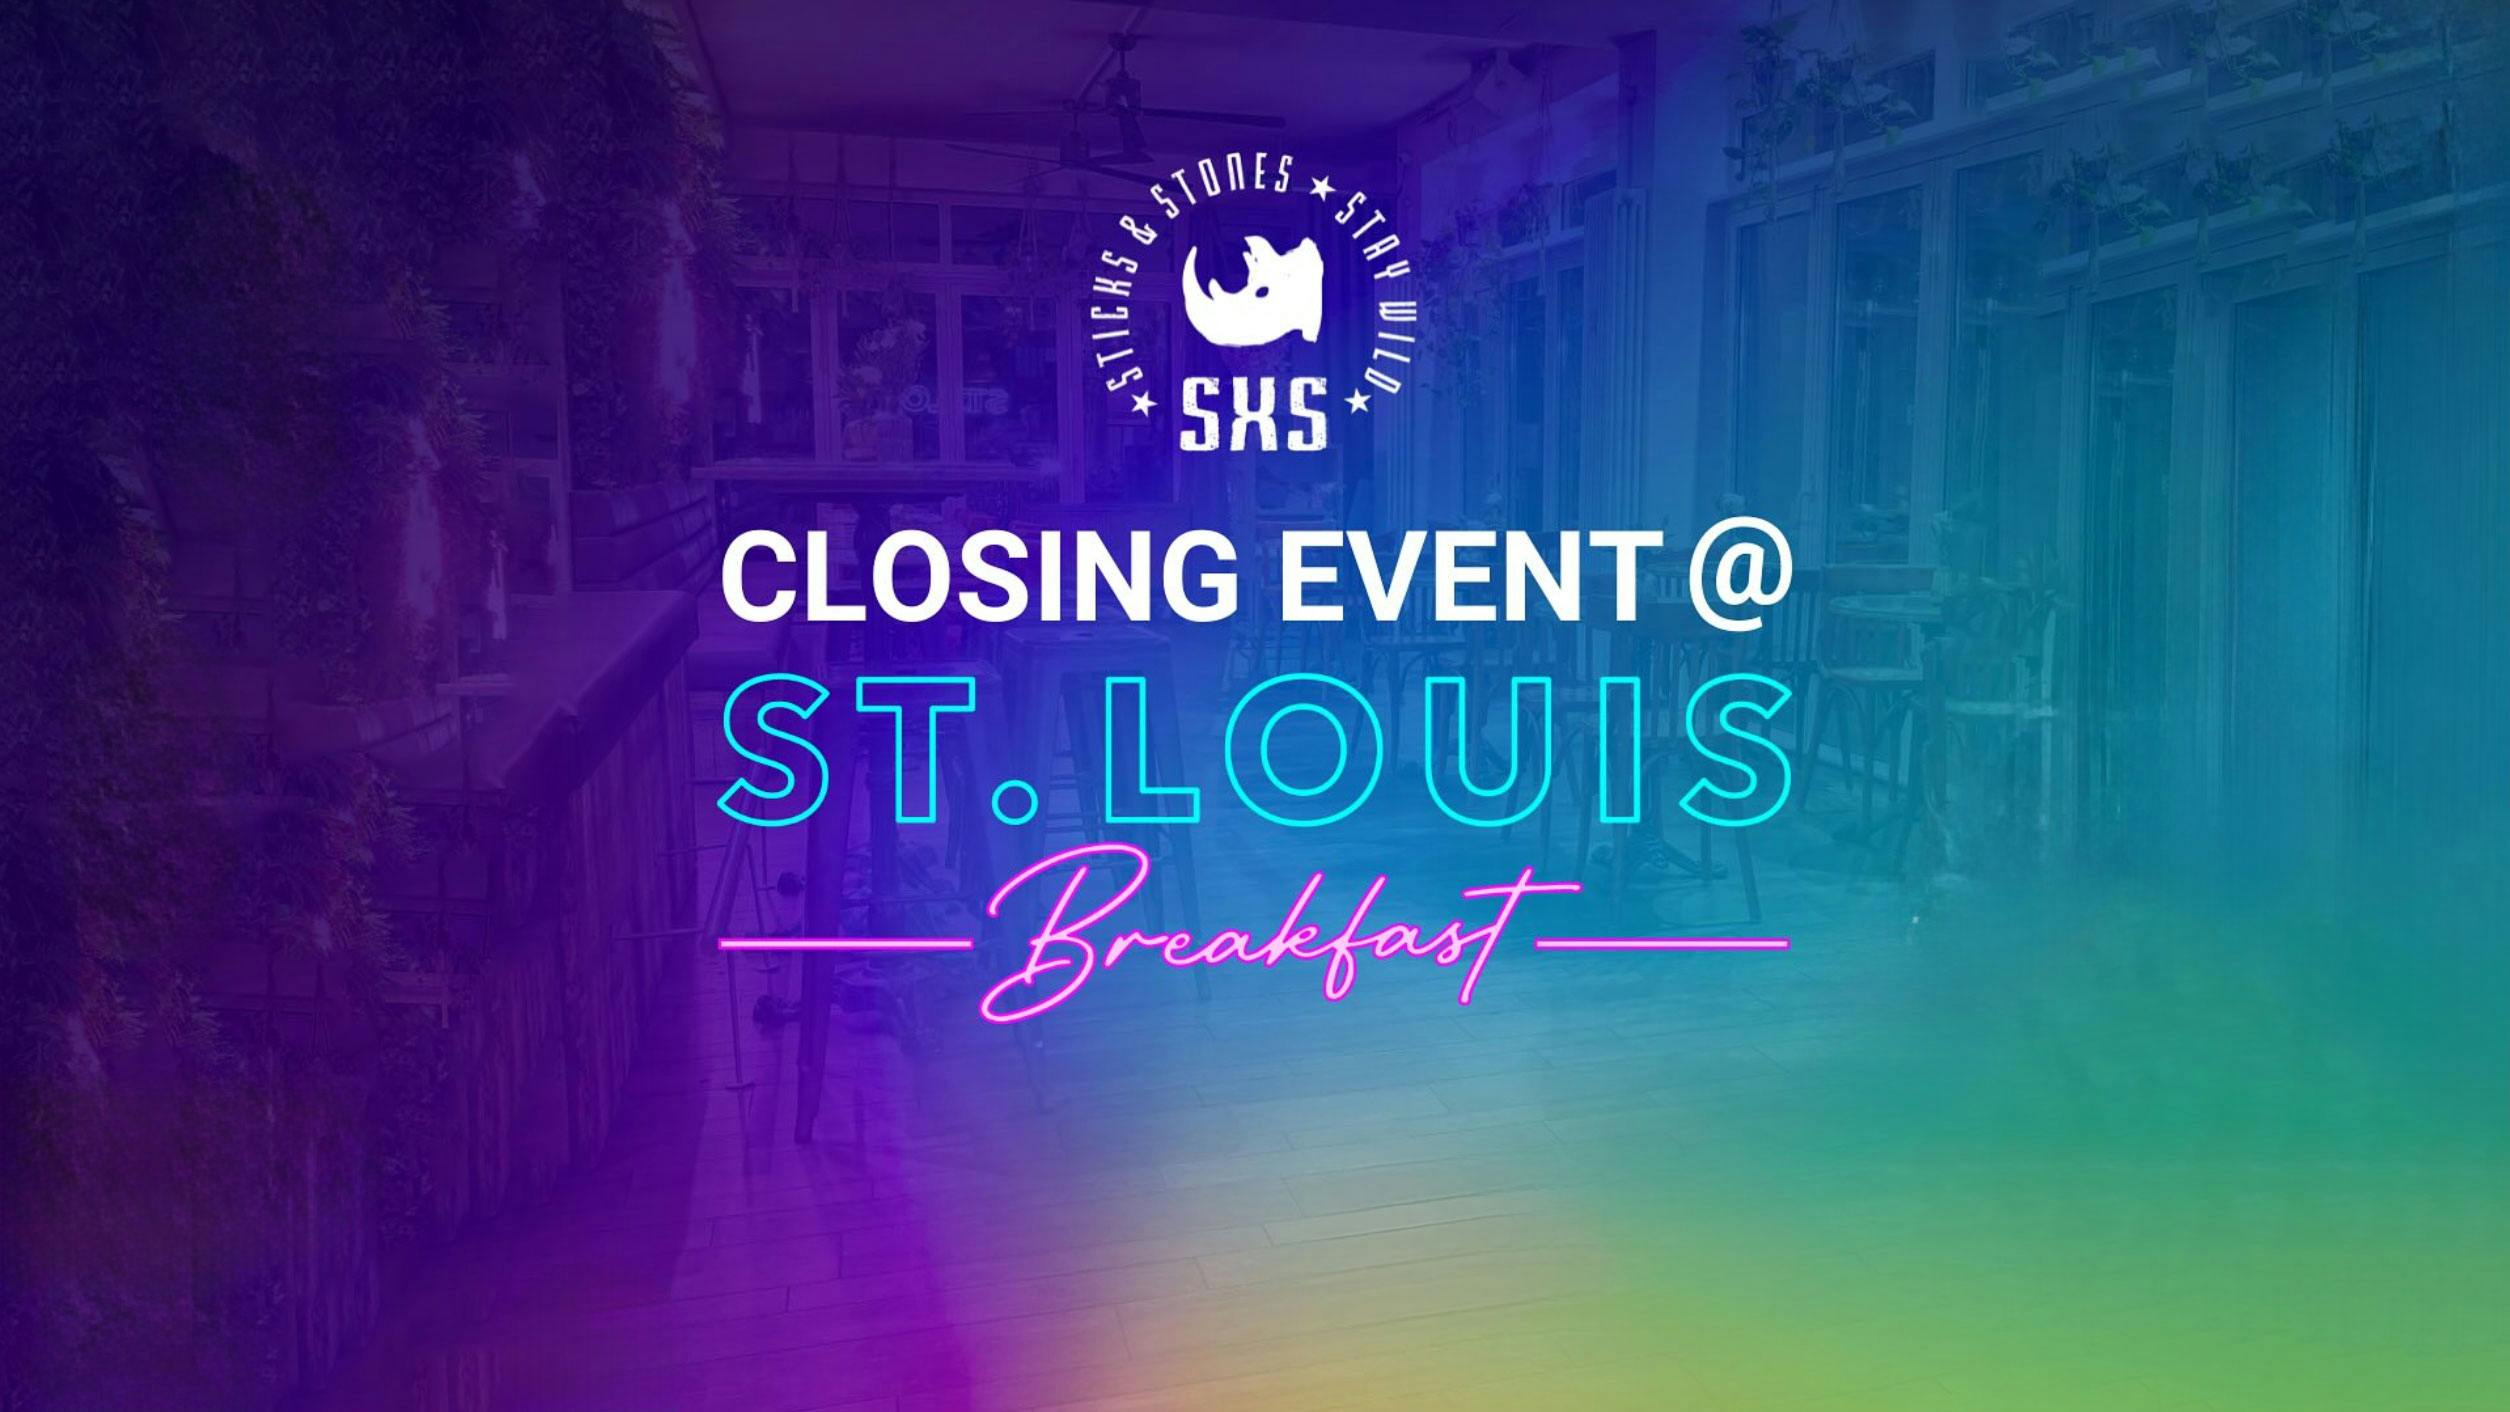 ST. LOUIS Breakfast | SXS CLOSING EVENT